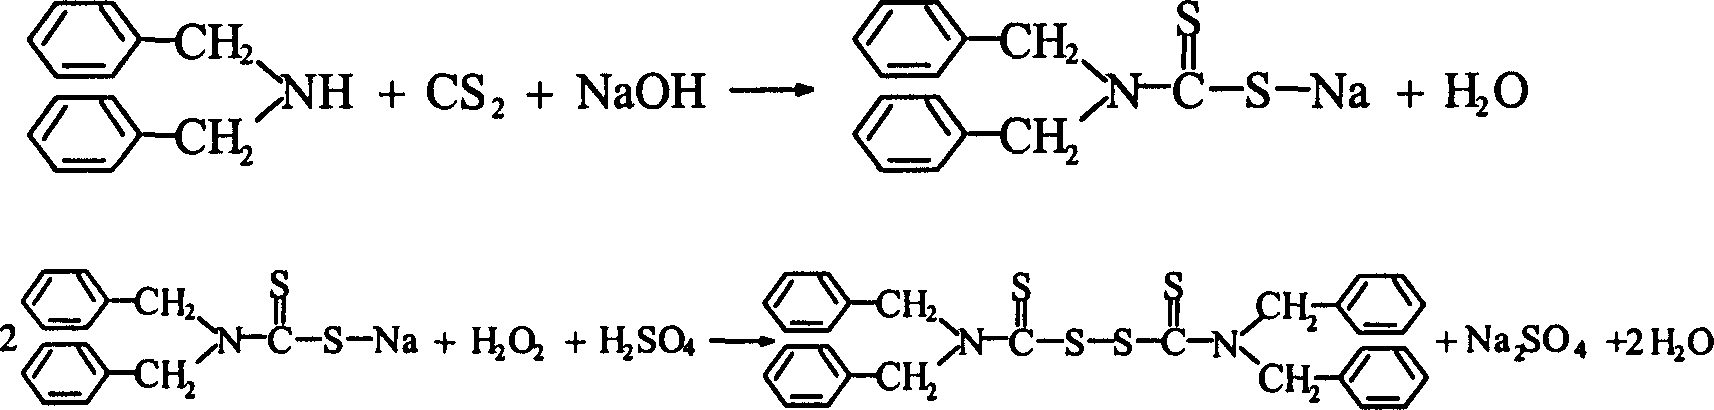 Process for preparing tetra-benzyl thiram disulfide